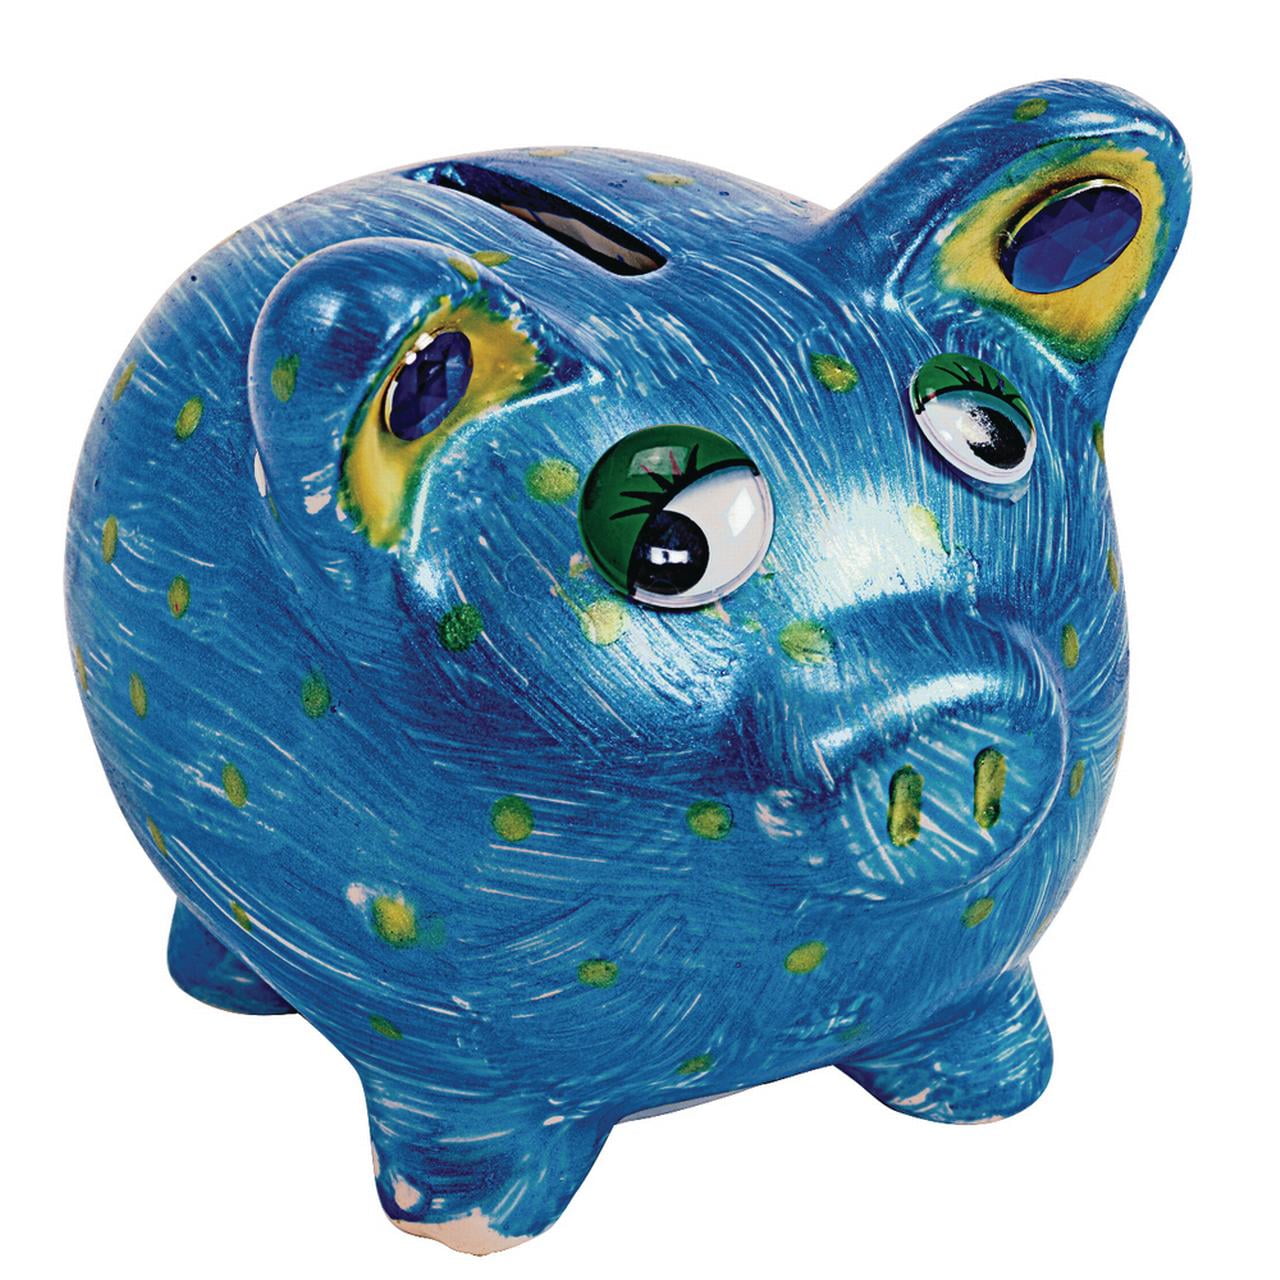 KSG Pastimes Decorate Your Own 2 Ceramic Piggy Banks 